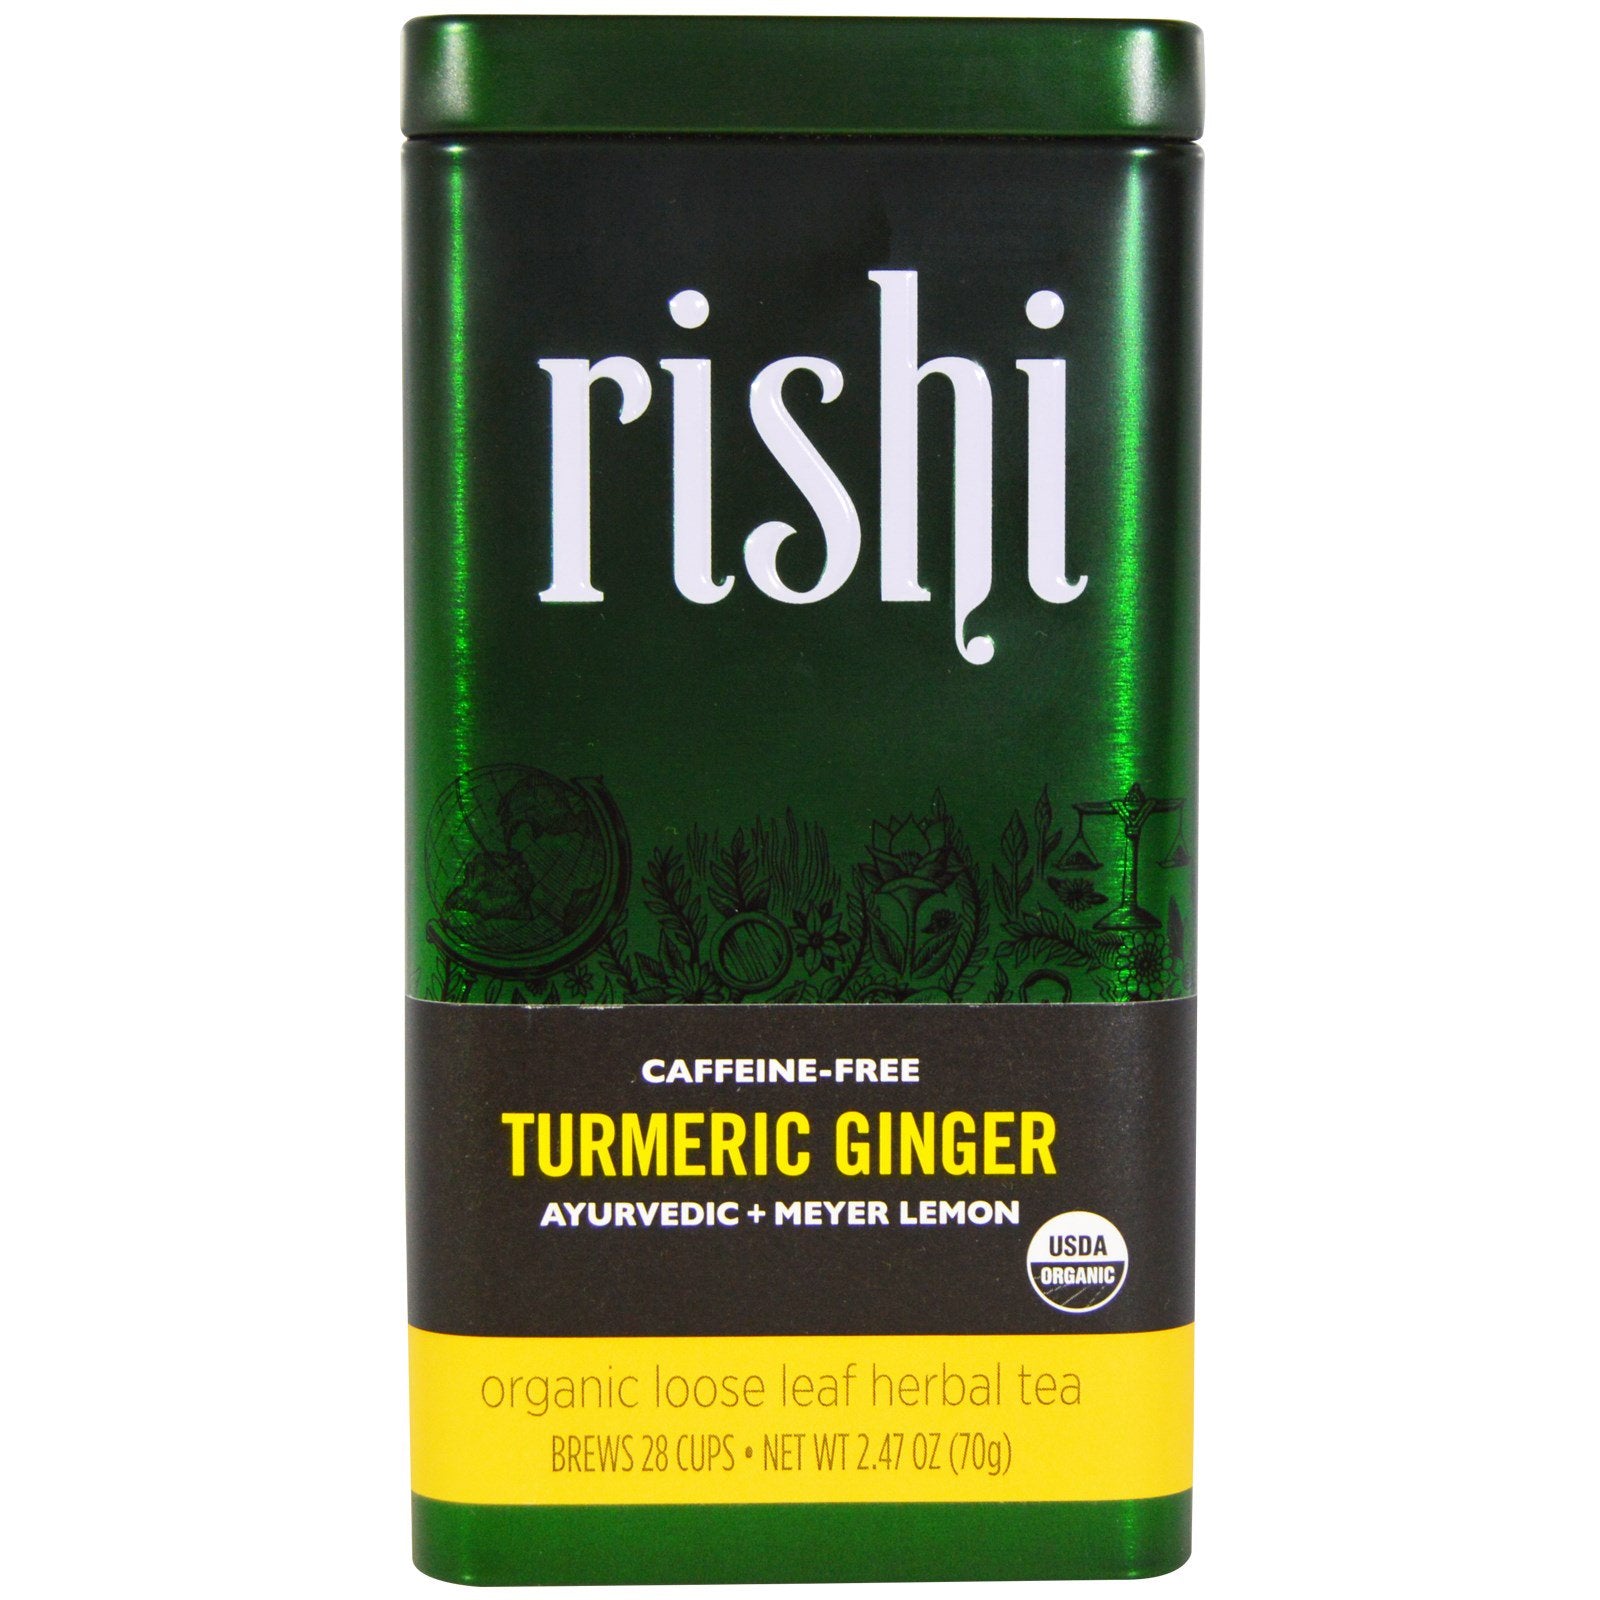 Rishi Tea, Turmeric Ginger, Organic Loose Leaf Herbal Tea, Ayurvedic + Meyer Lemon, 2.47 oz (70 g)